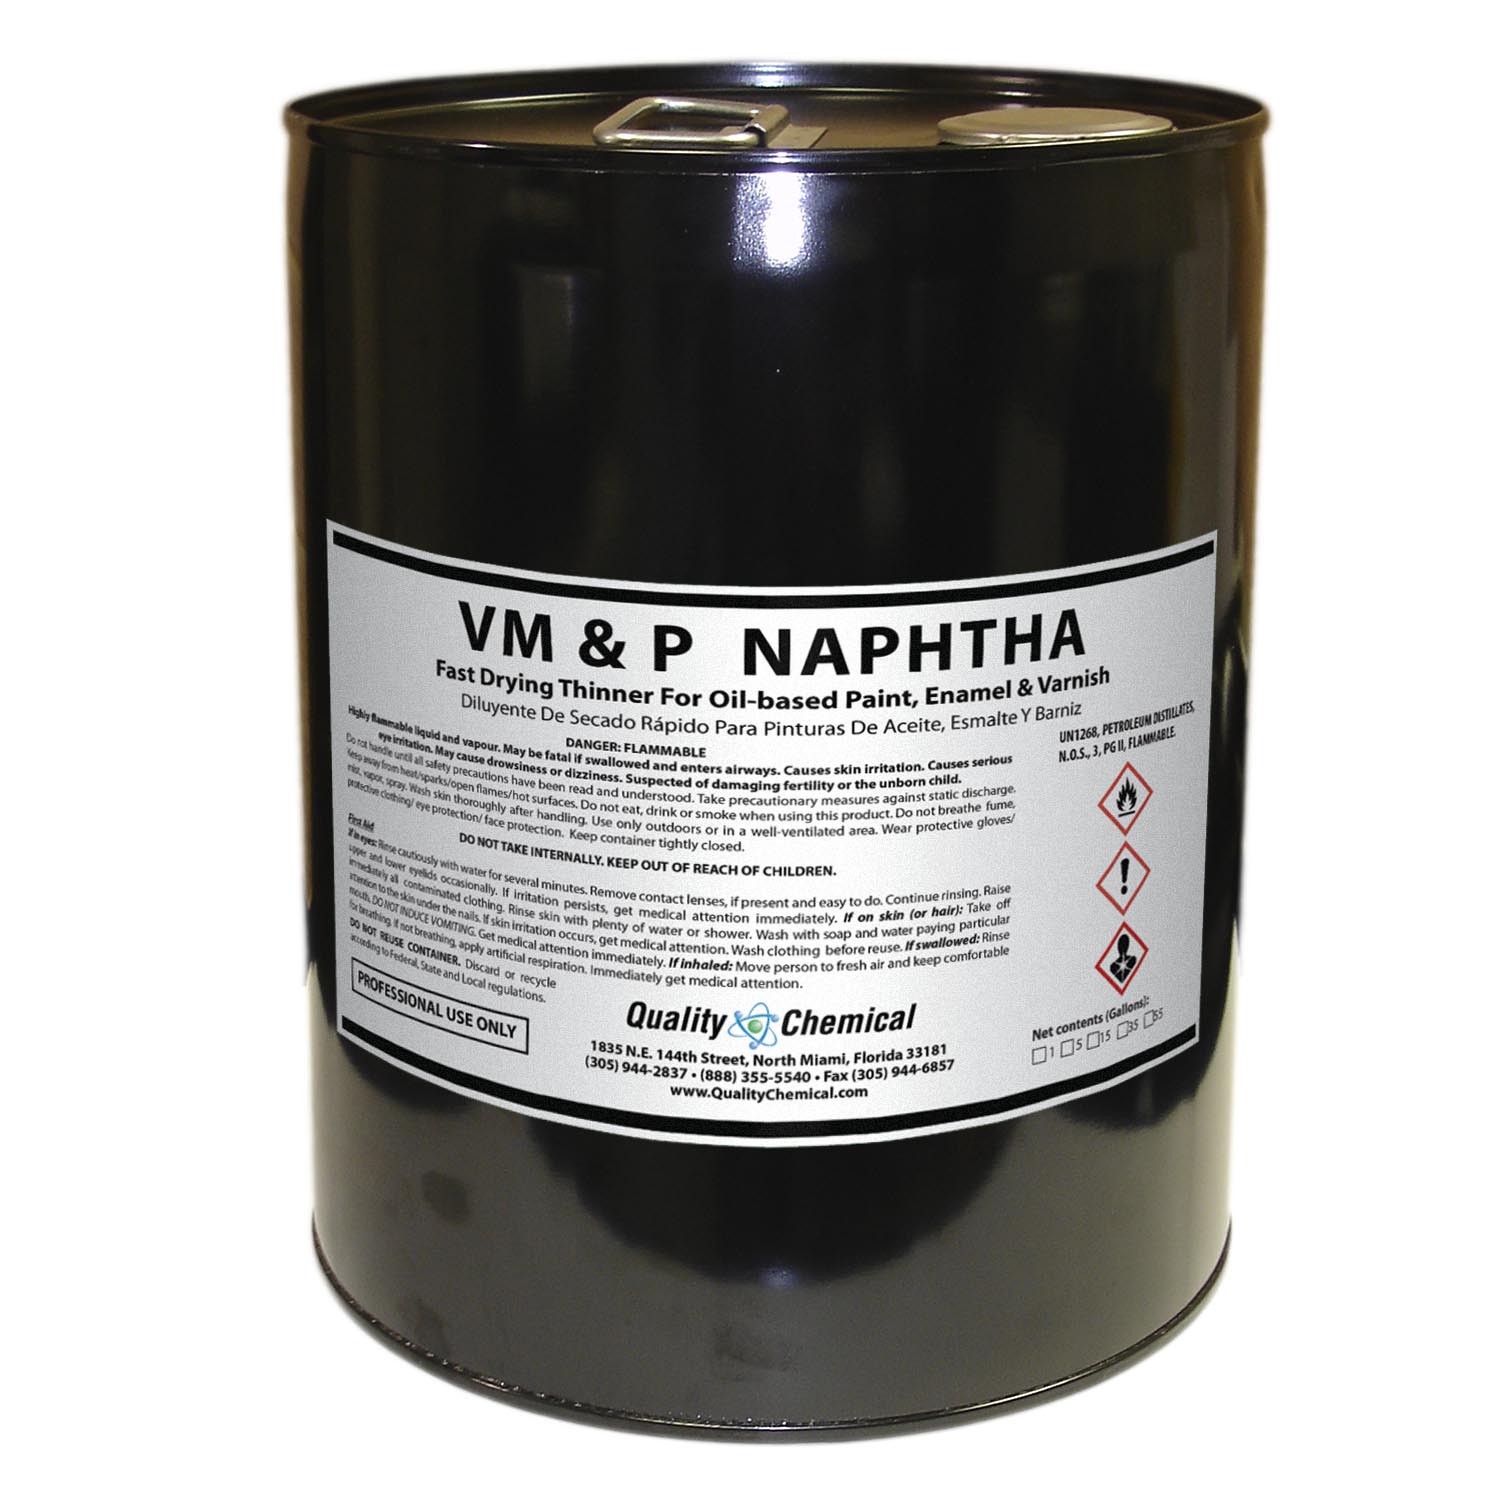 UN1268 Petroleum, Distillates, N.O.S. (Naphtha Solvent)